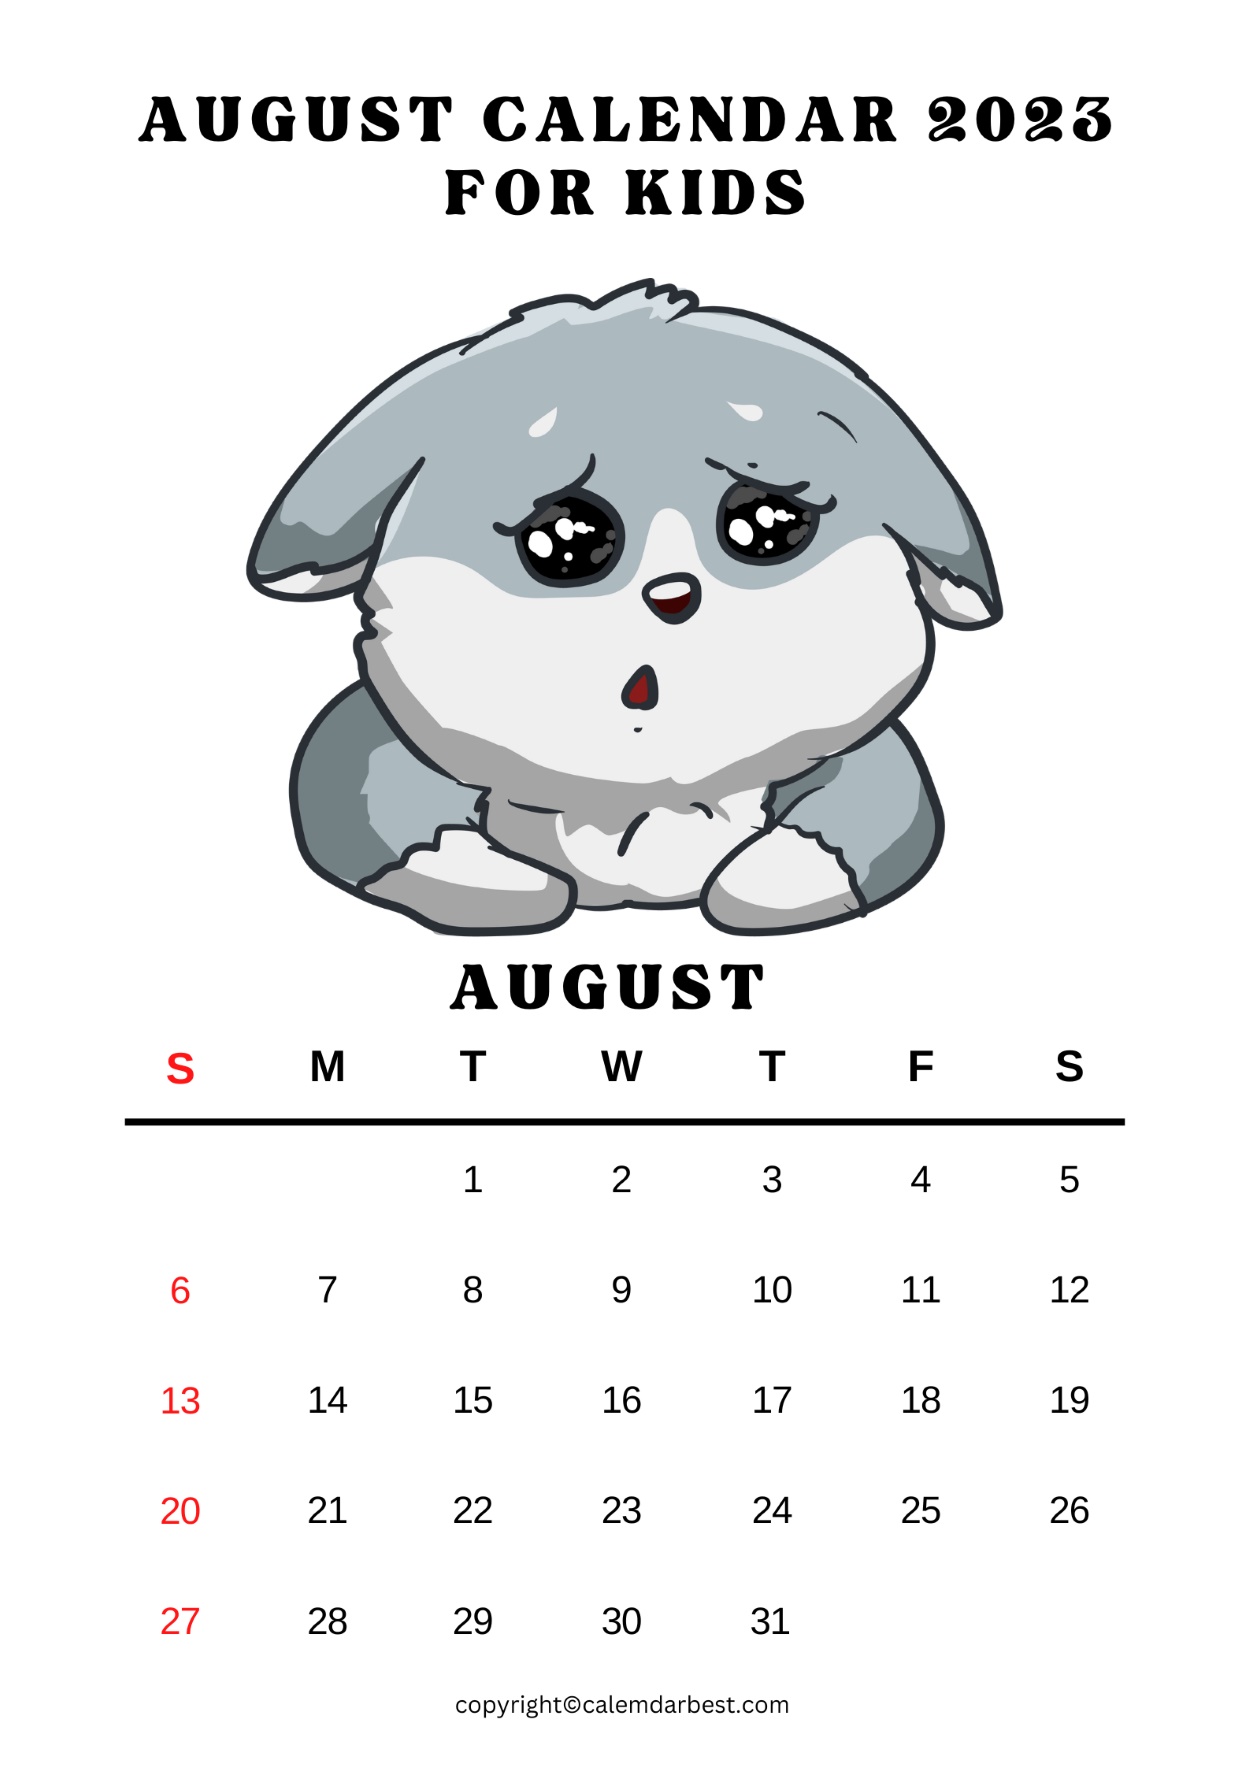 August Calendar 2023 for kids